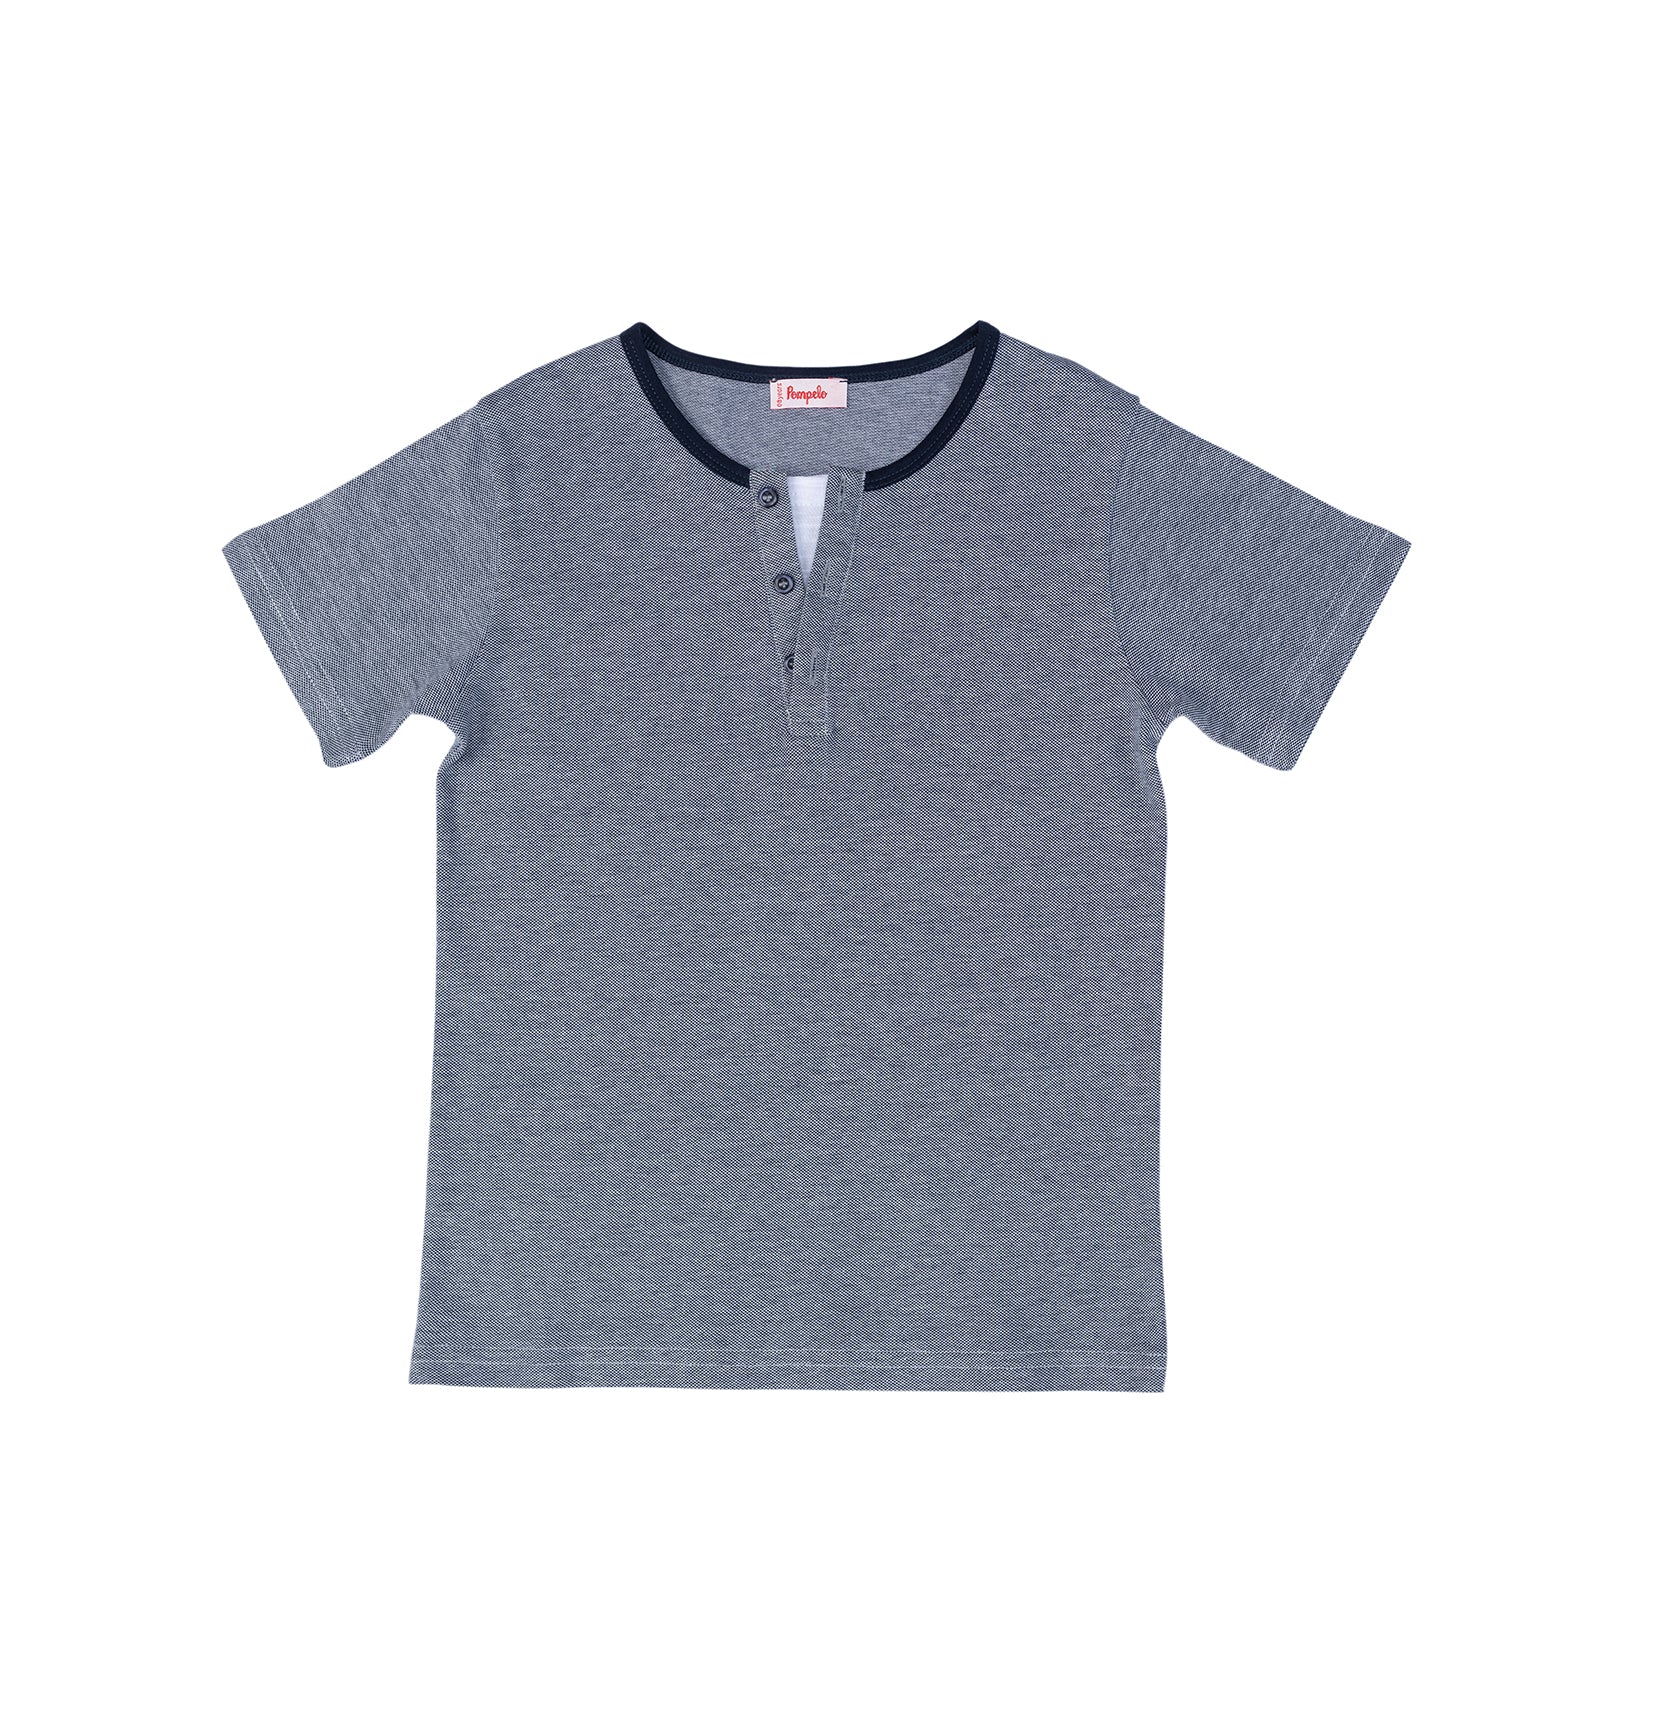 Comfy plain half sleeve tshirt for boys by Pompelo